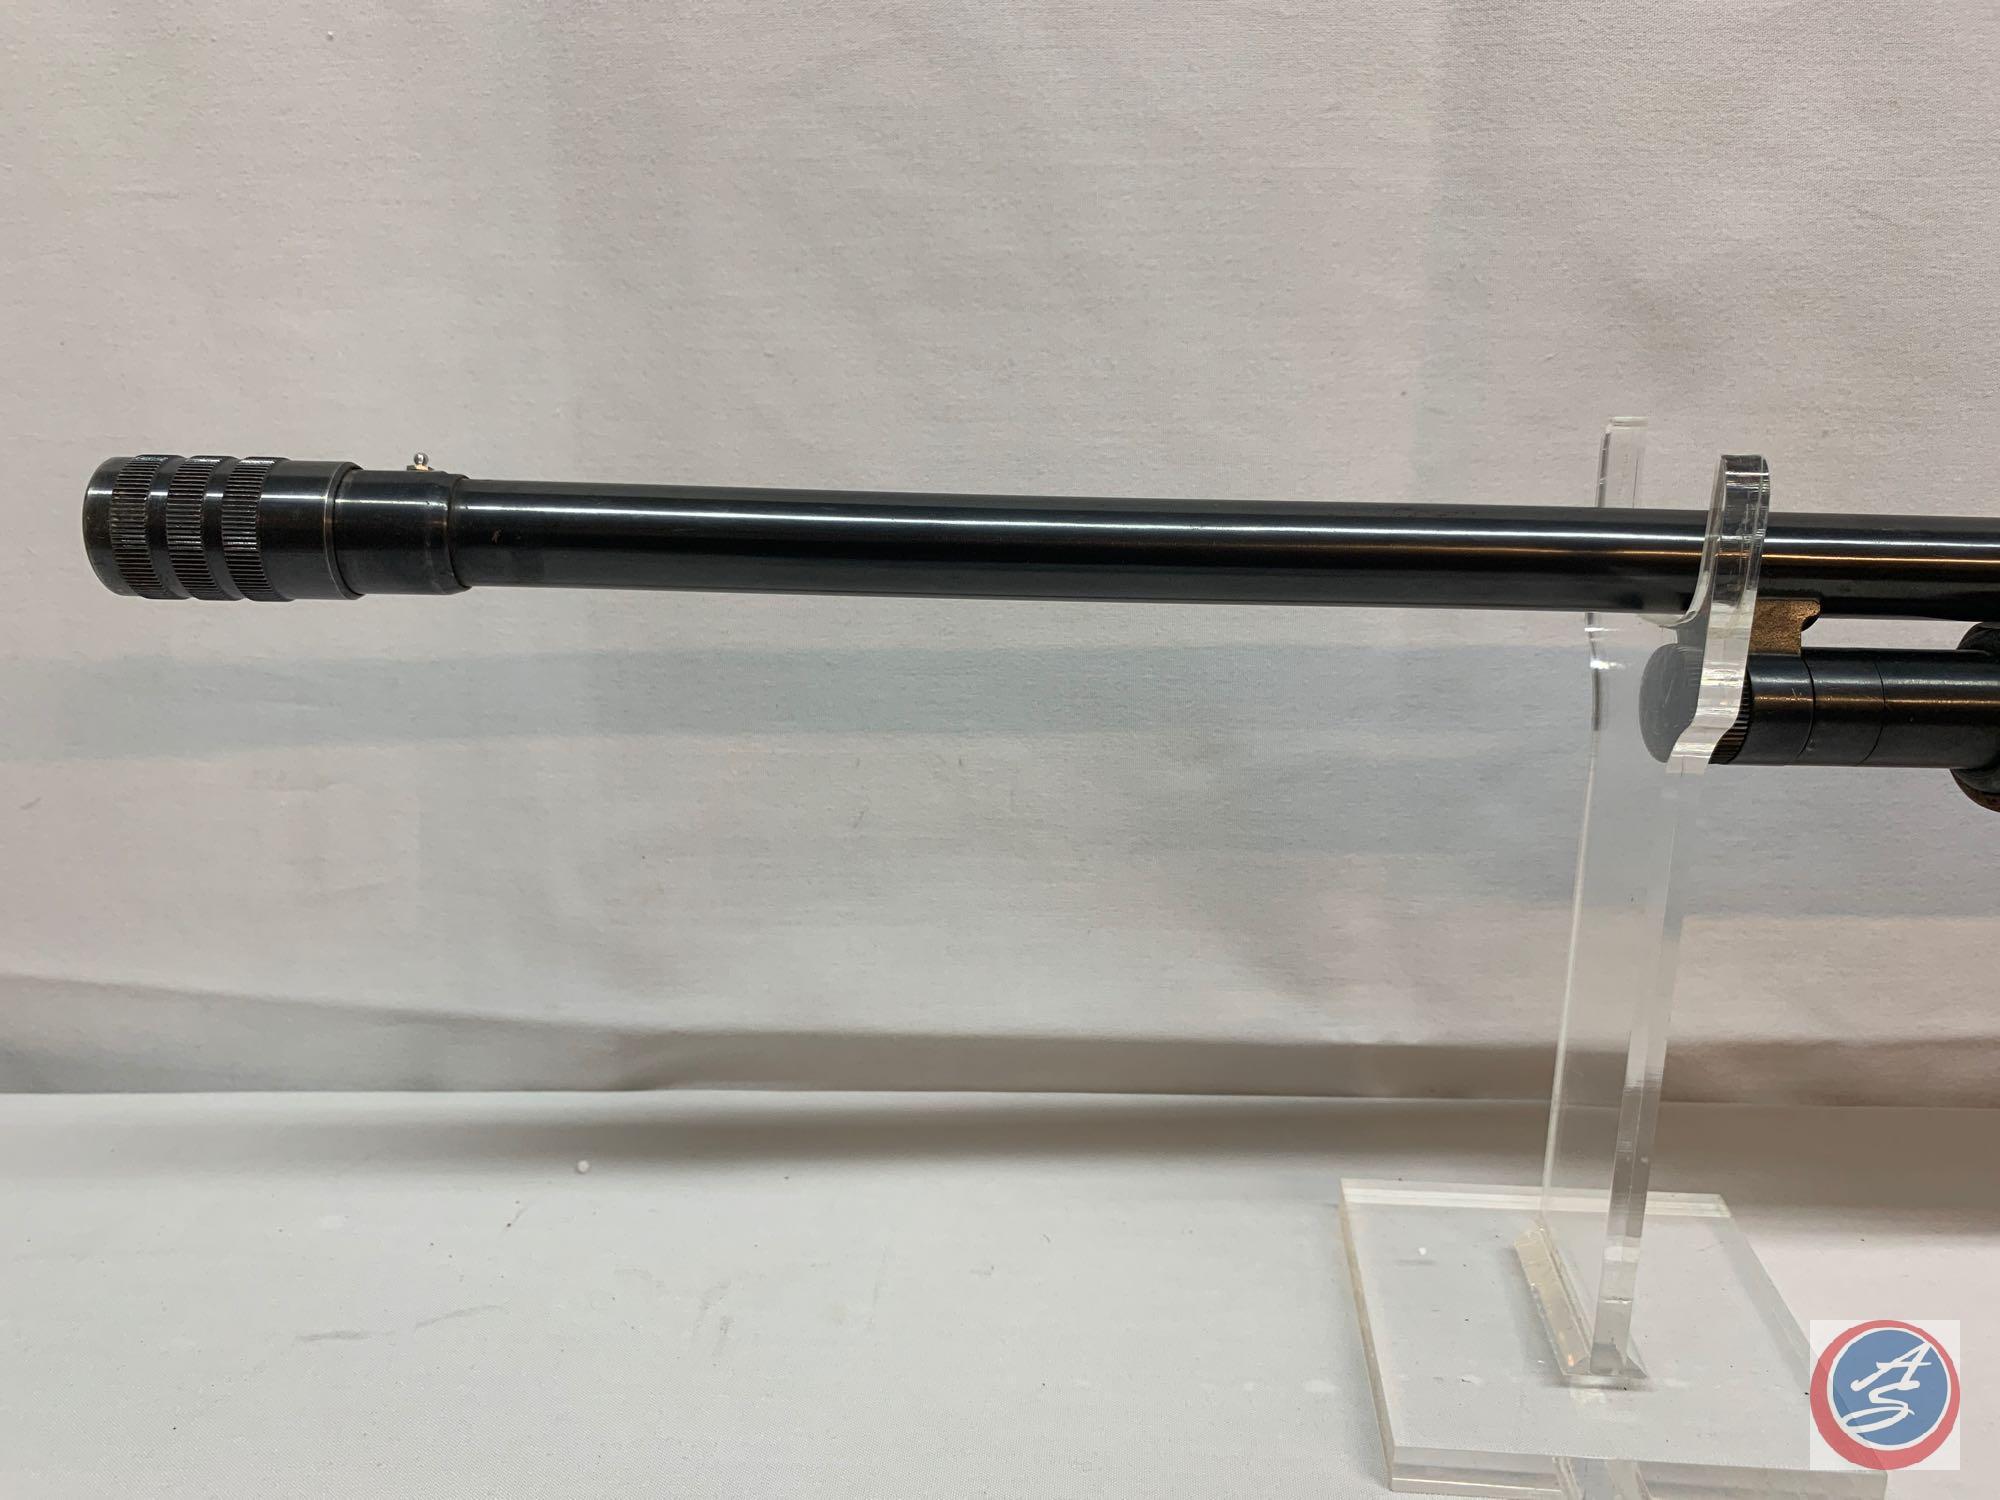 Mossberg Model 500 A 12 GA 3" Shotgun Pump Action Shotgun with 28 inch barrel and C-Lect Choke Ser #